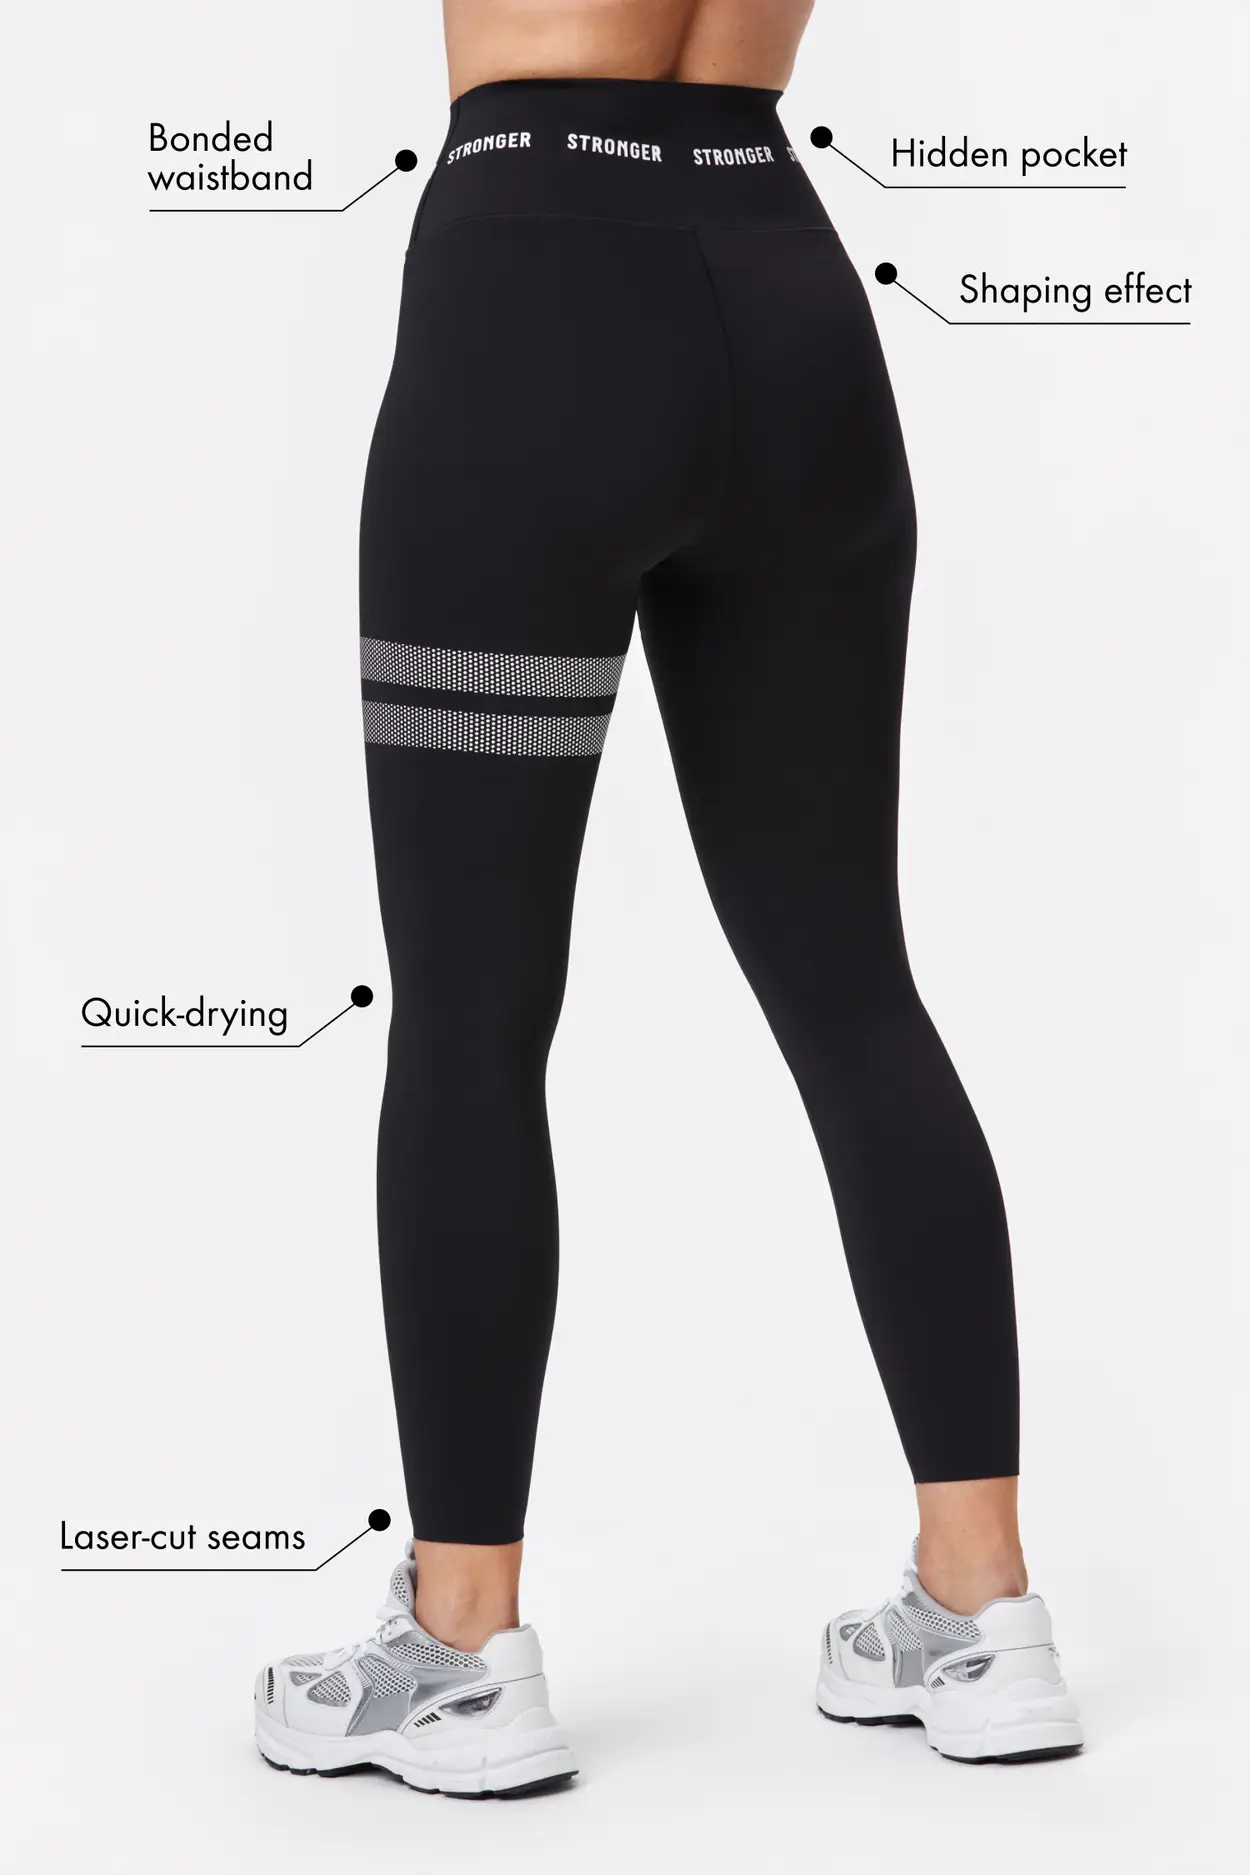 Leggings for Women High Waist Gym Workout Yoga Pants Laser Cut